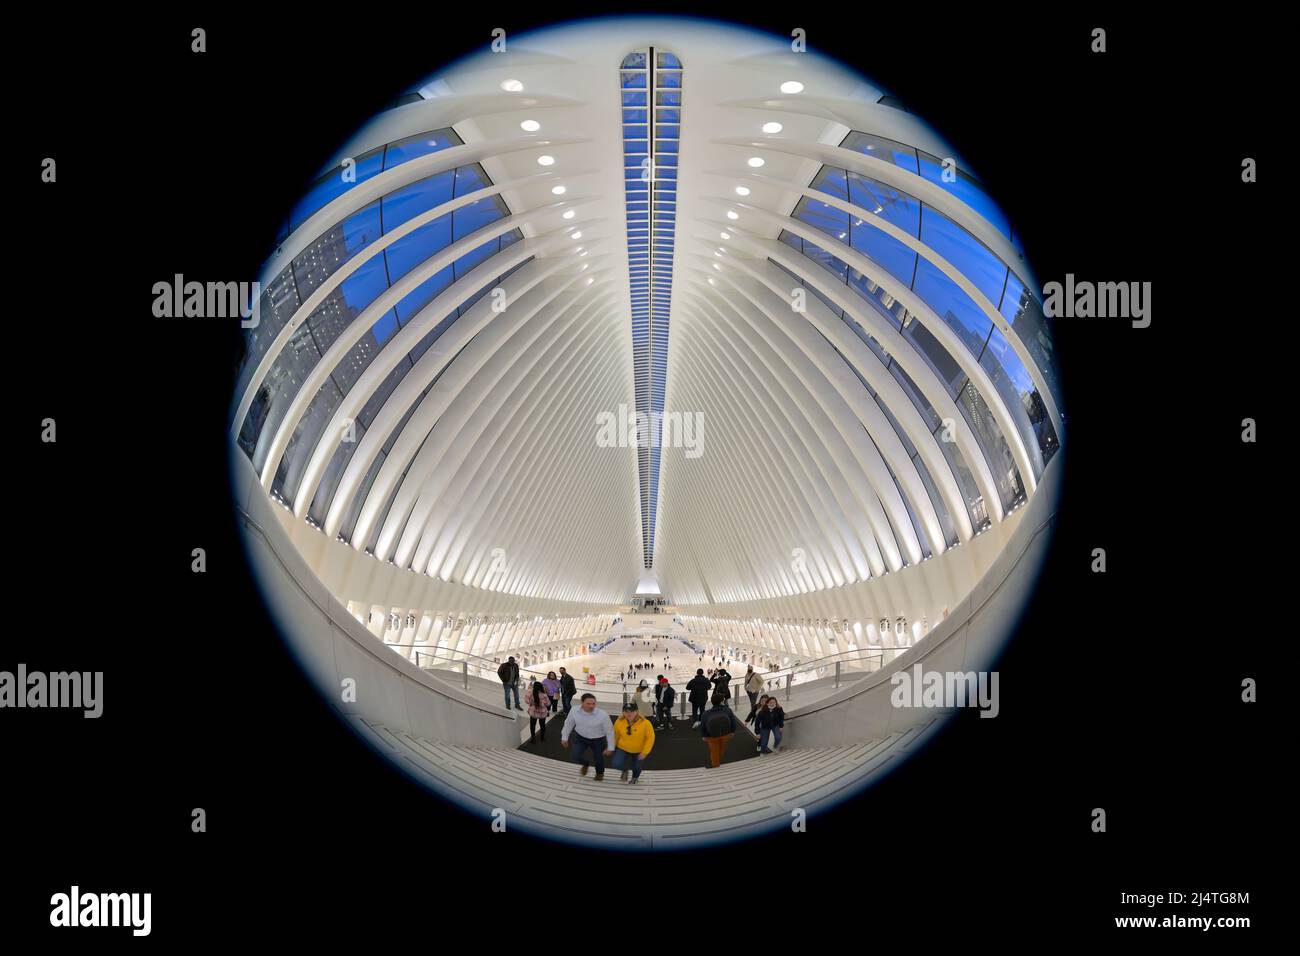 New York landmark of Oculus - One World Center transportation hub, New York City NY Stock Photo